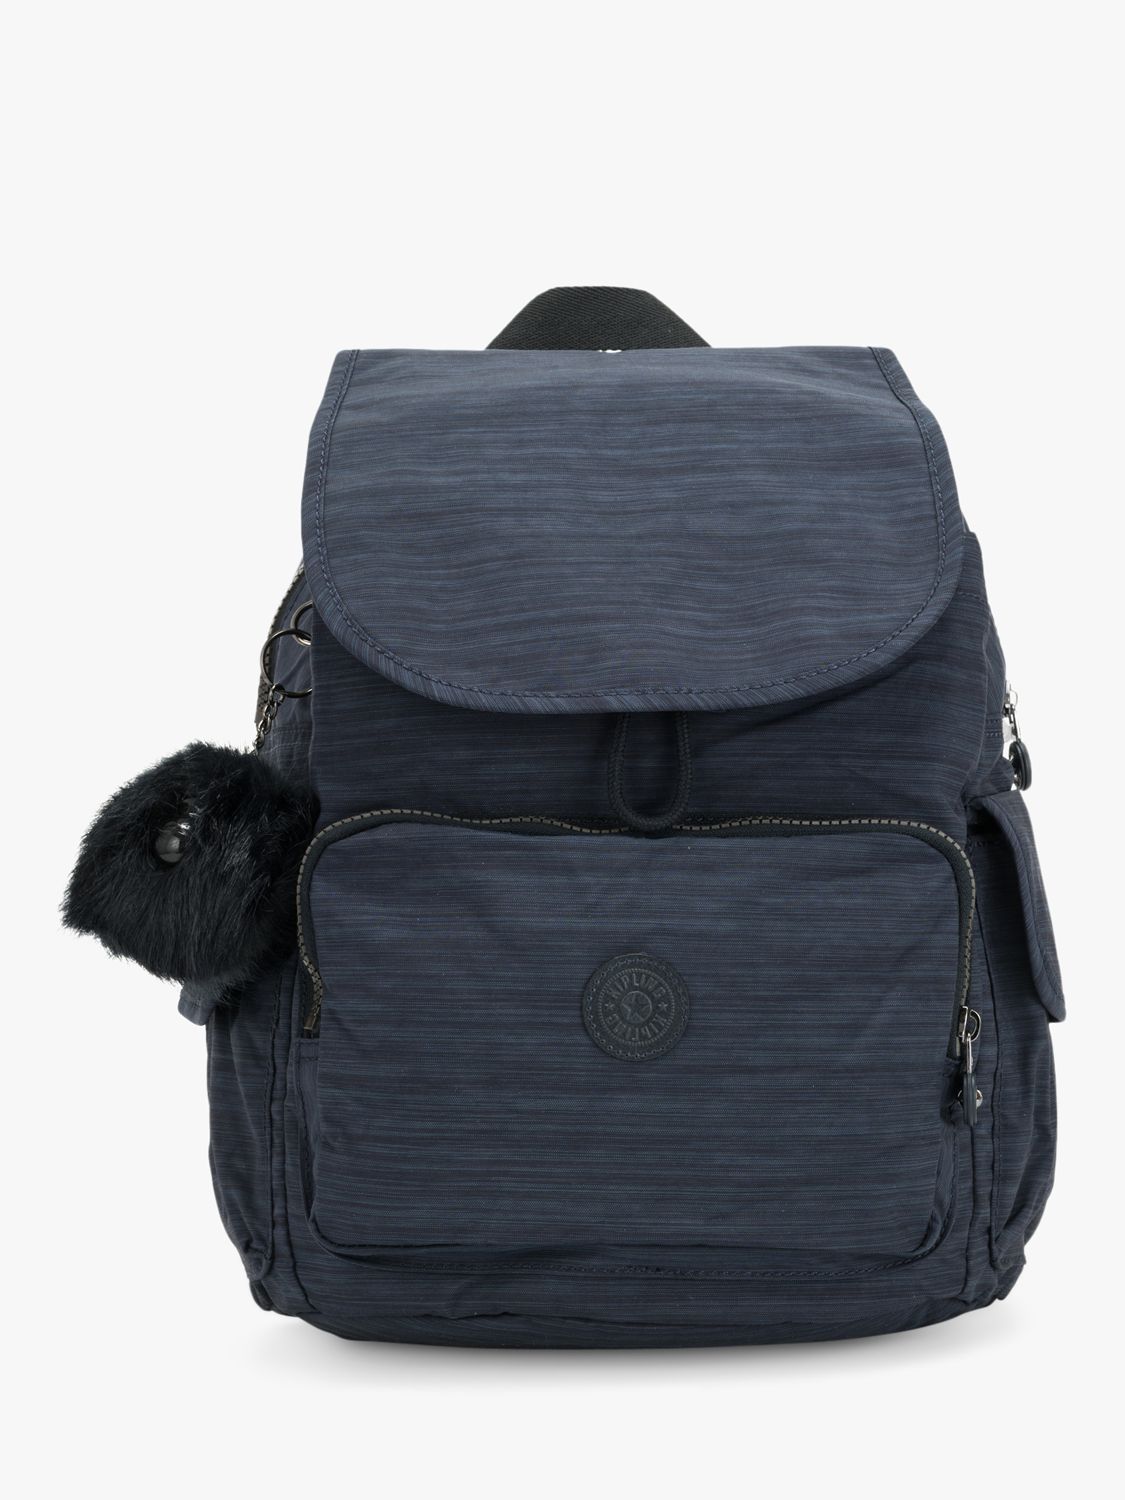 Kipling City Pack Backpack, True Dazz Navy